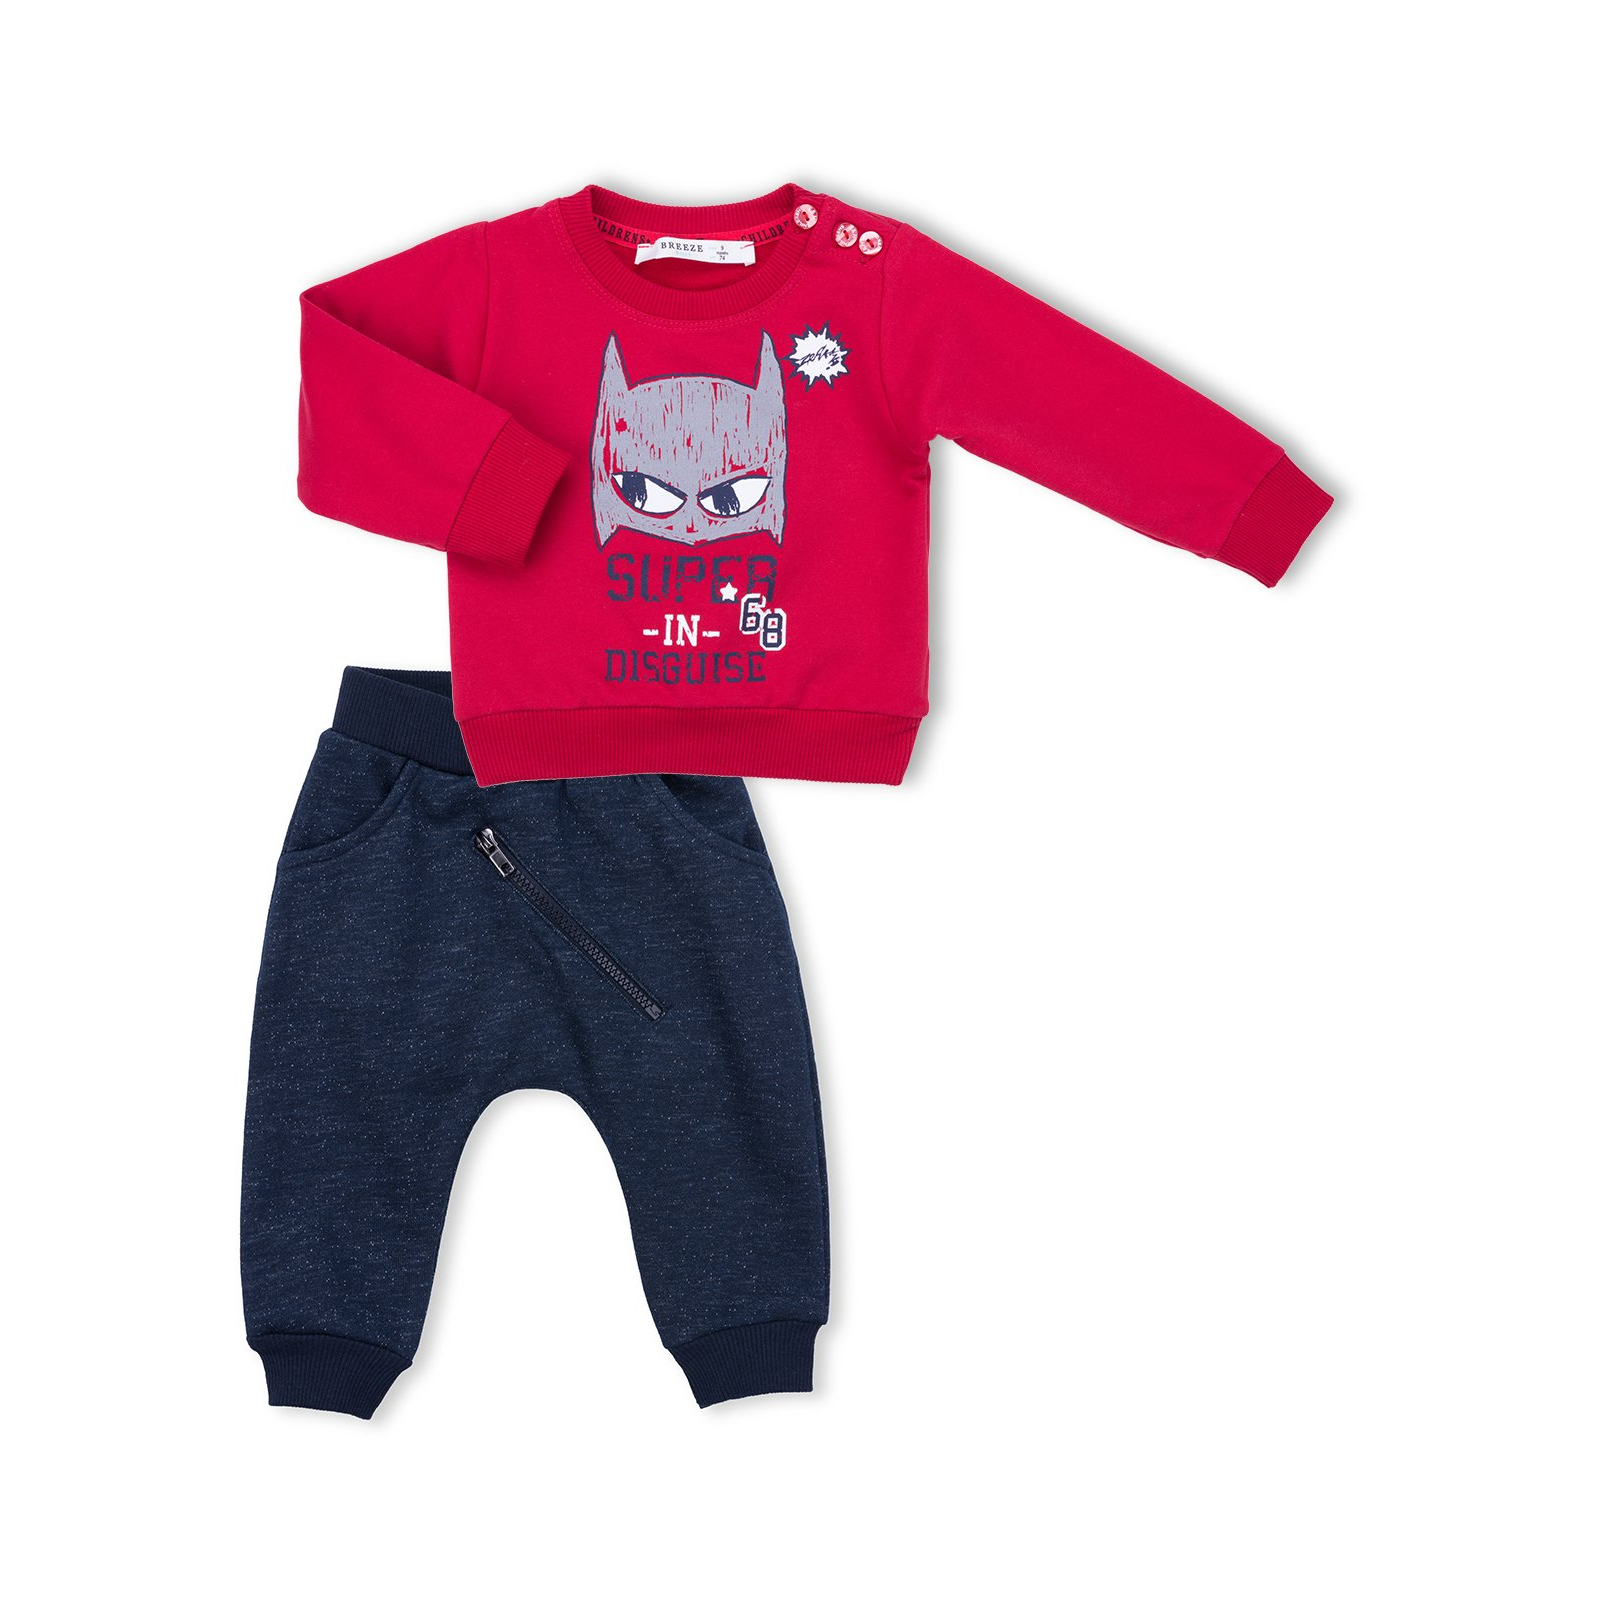 Набор детской одежды Breeze "Super in disguise" (10419-98B-red)